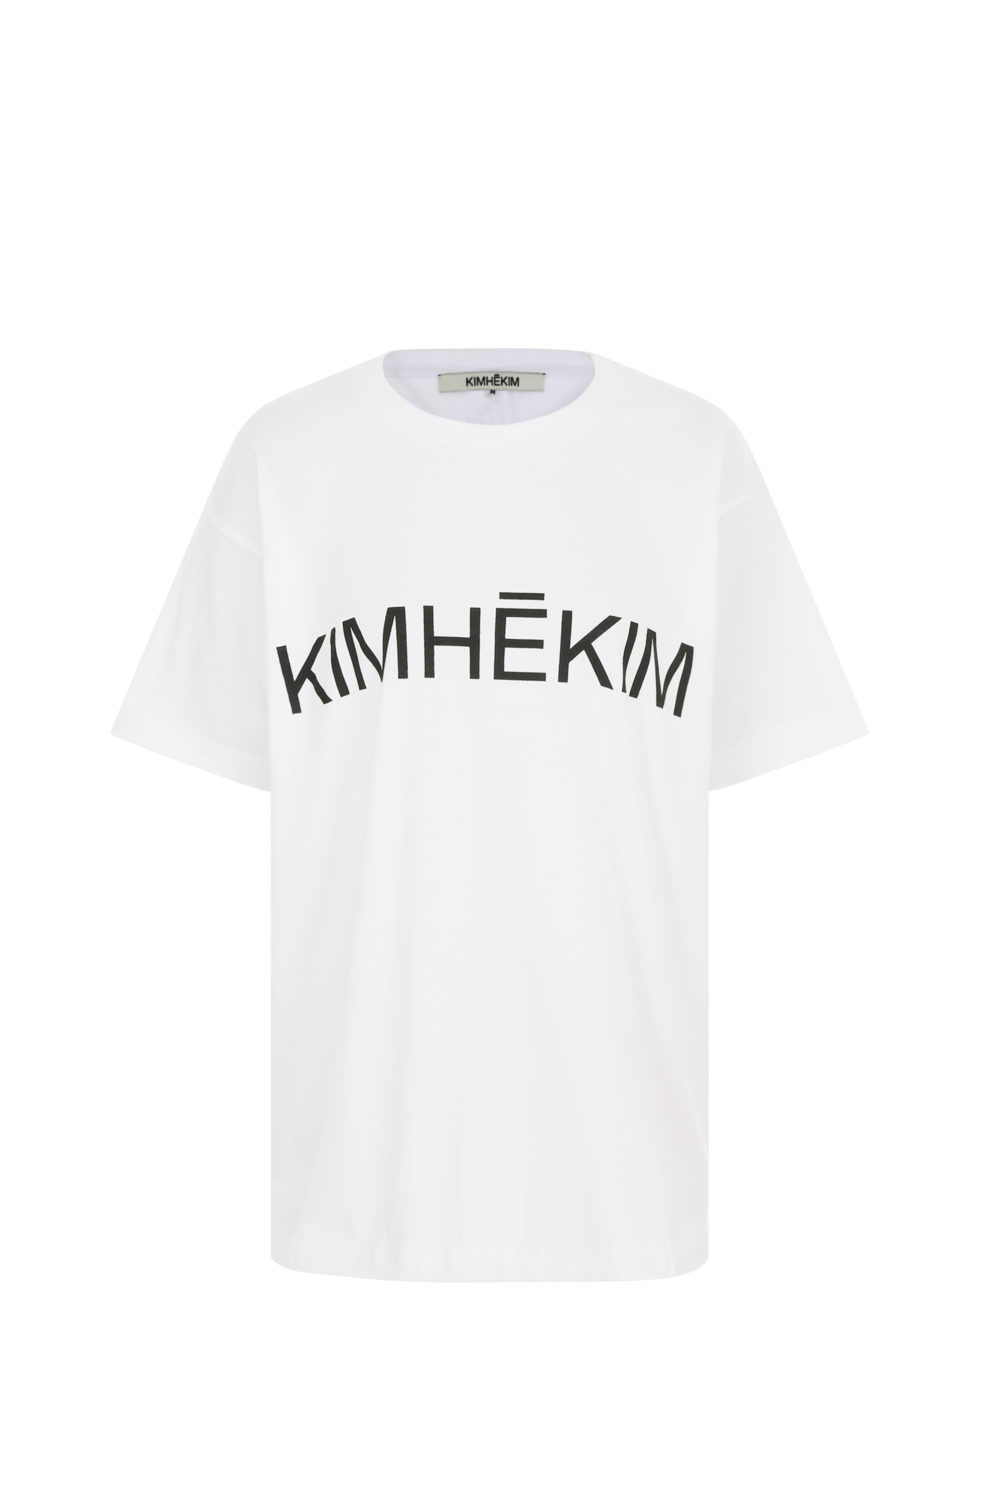 Kimhekim T-shirts – Kimhekim